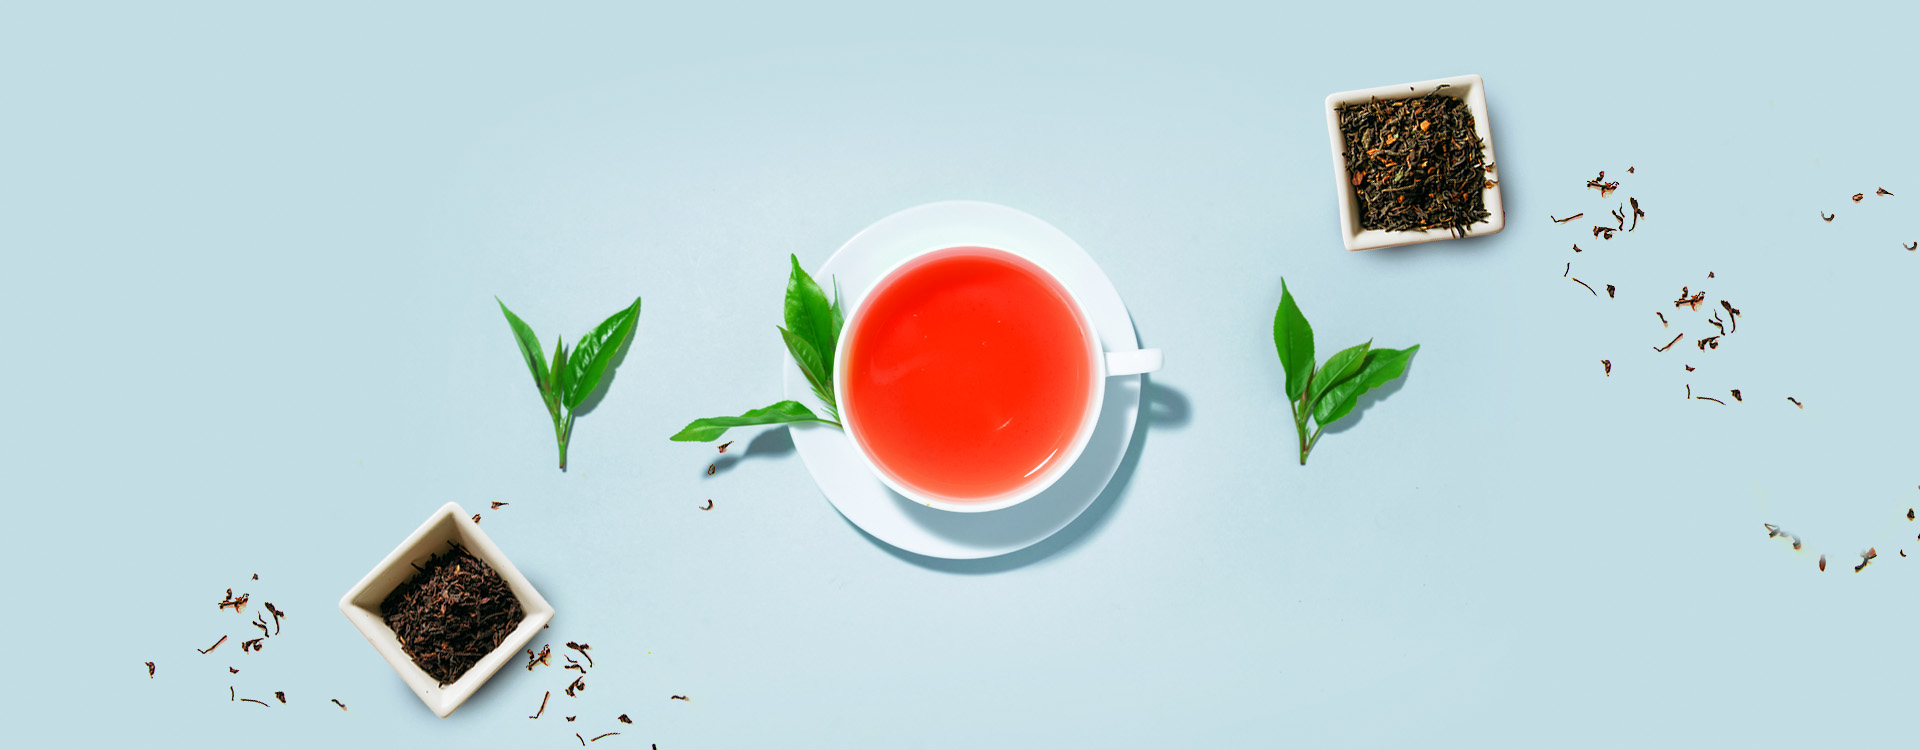 Blooming Tea Industry in India